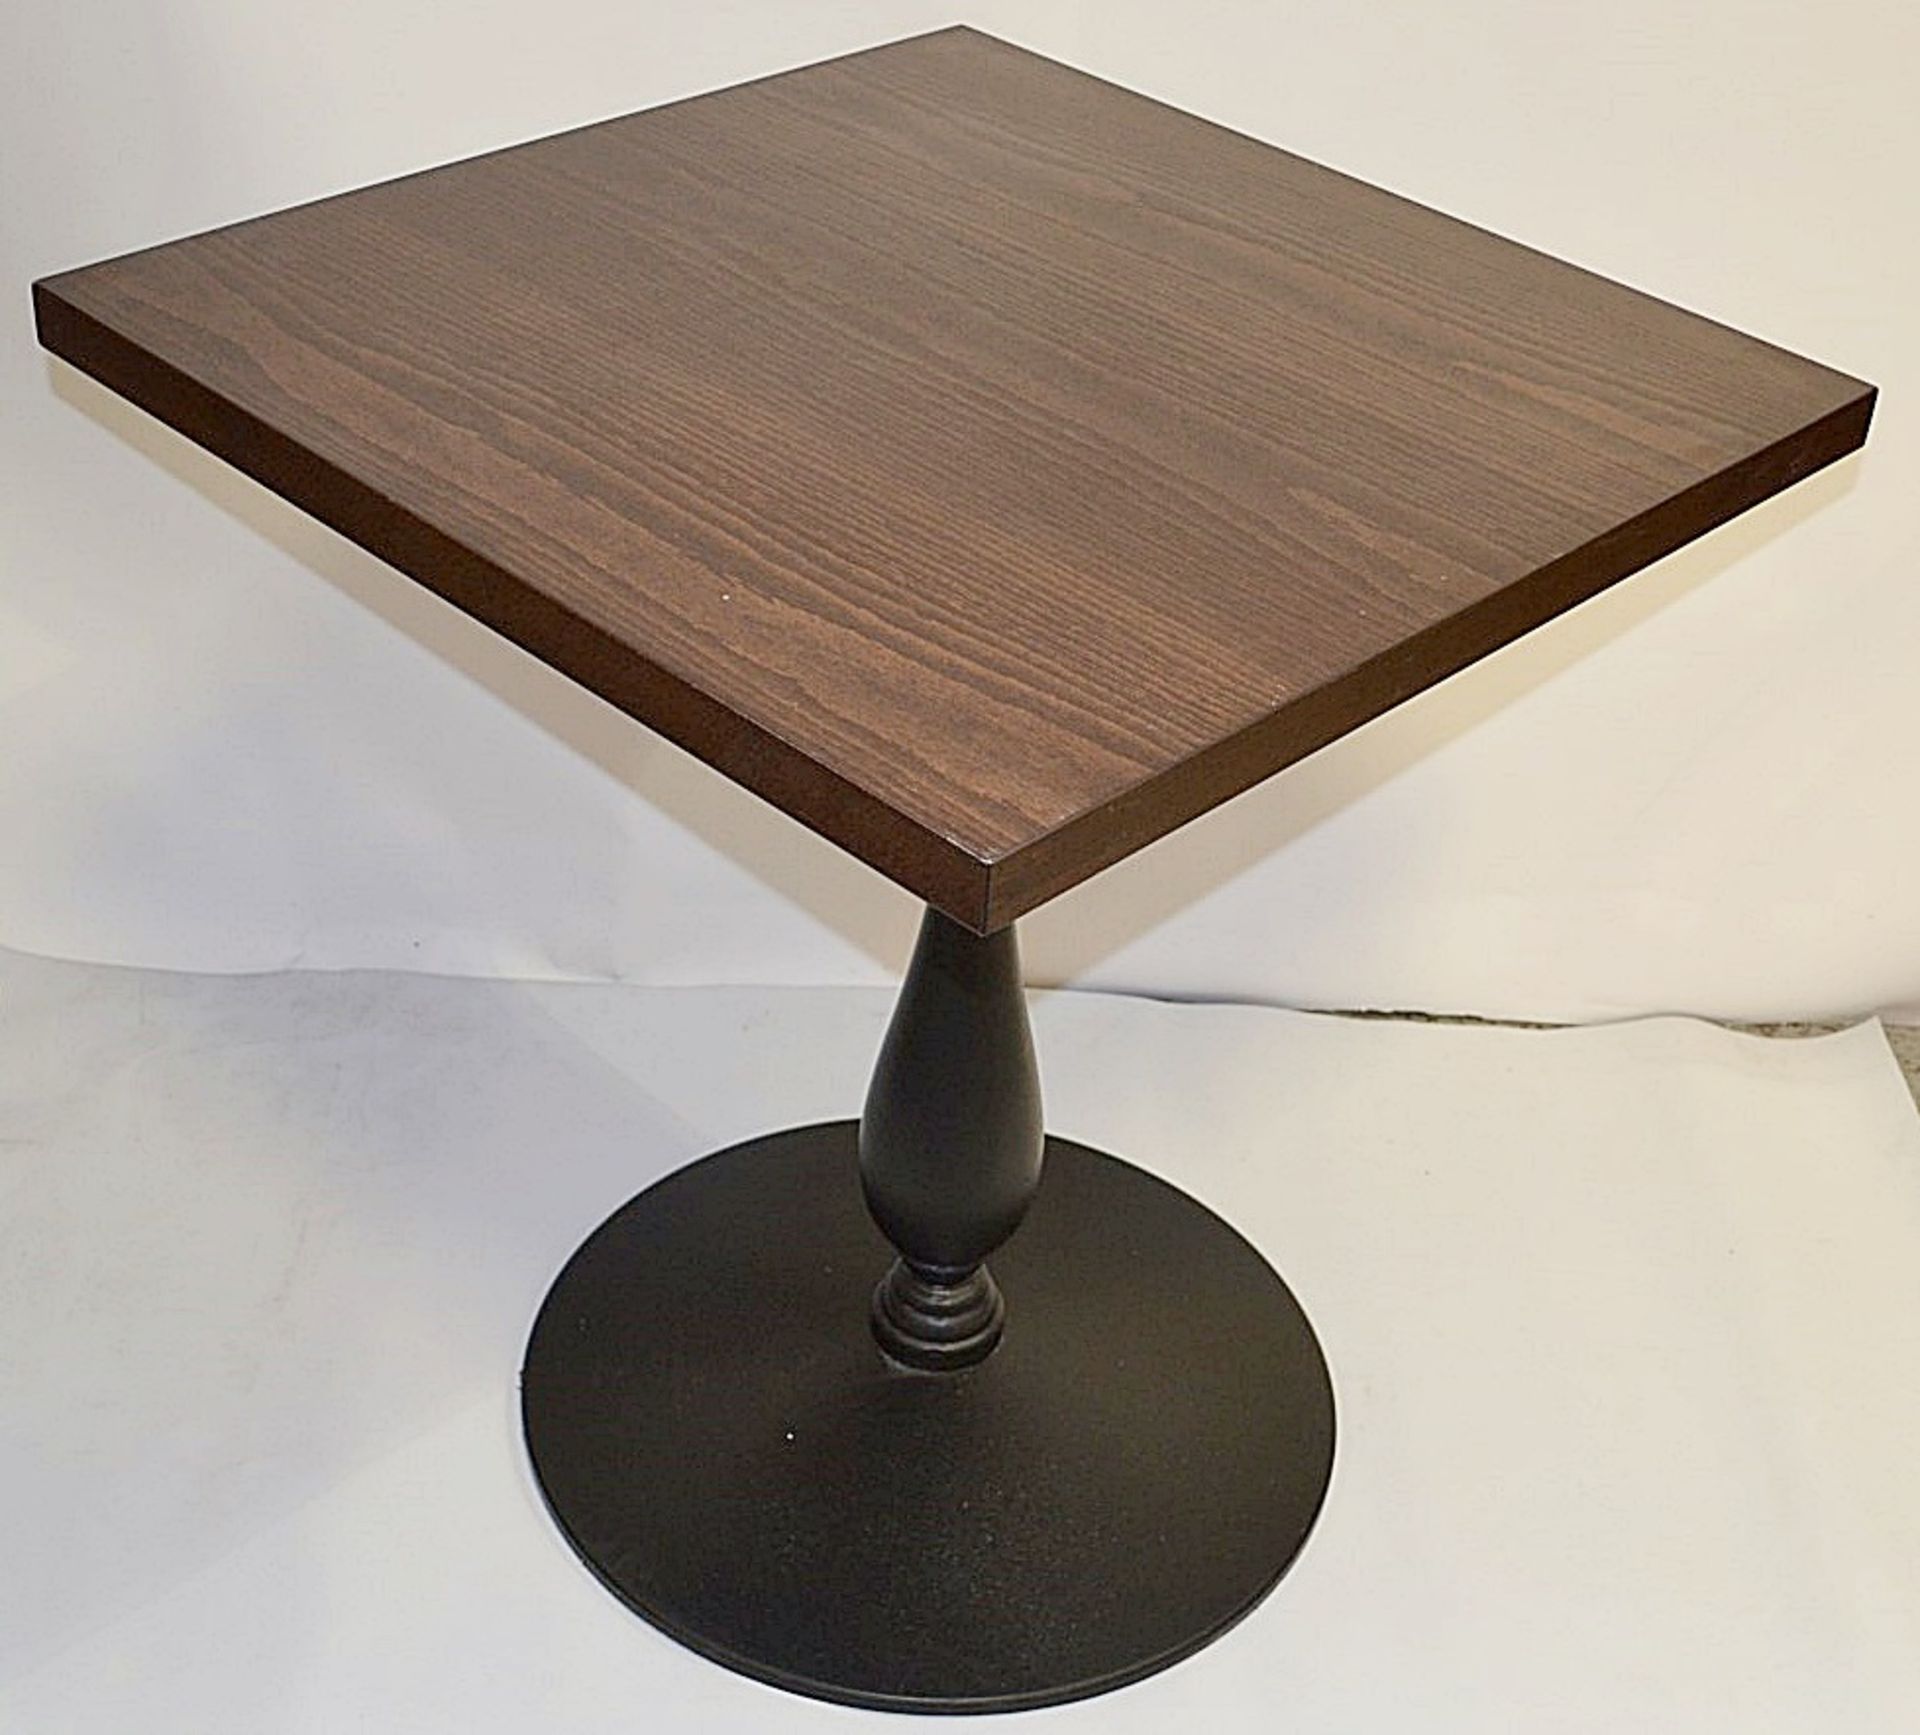 1 x Square Bistro Table - Dimensions: H76cm x W70 x D70cm - City Centre Restaurant Closure - Ref: